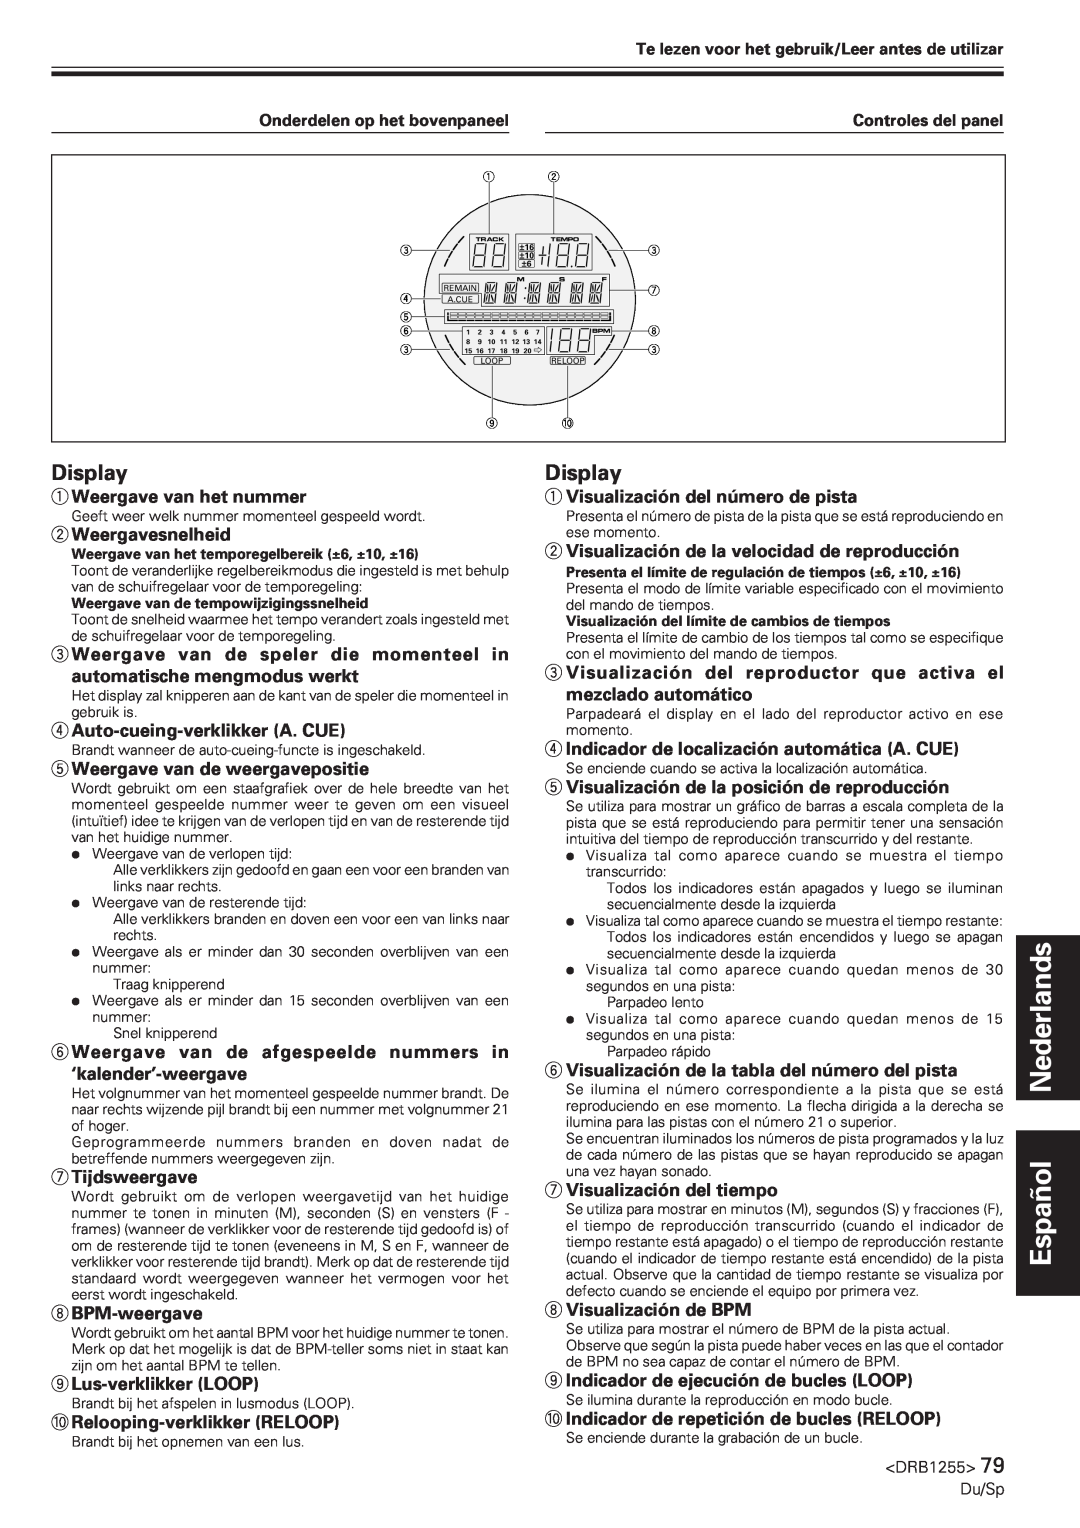 Pioneer CMX-5000 manual Español Nederlands, Display, 1Weergave van het nummer 